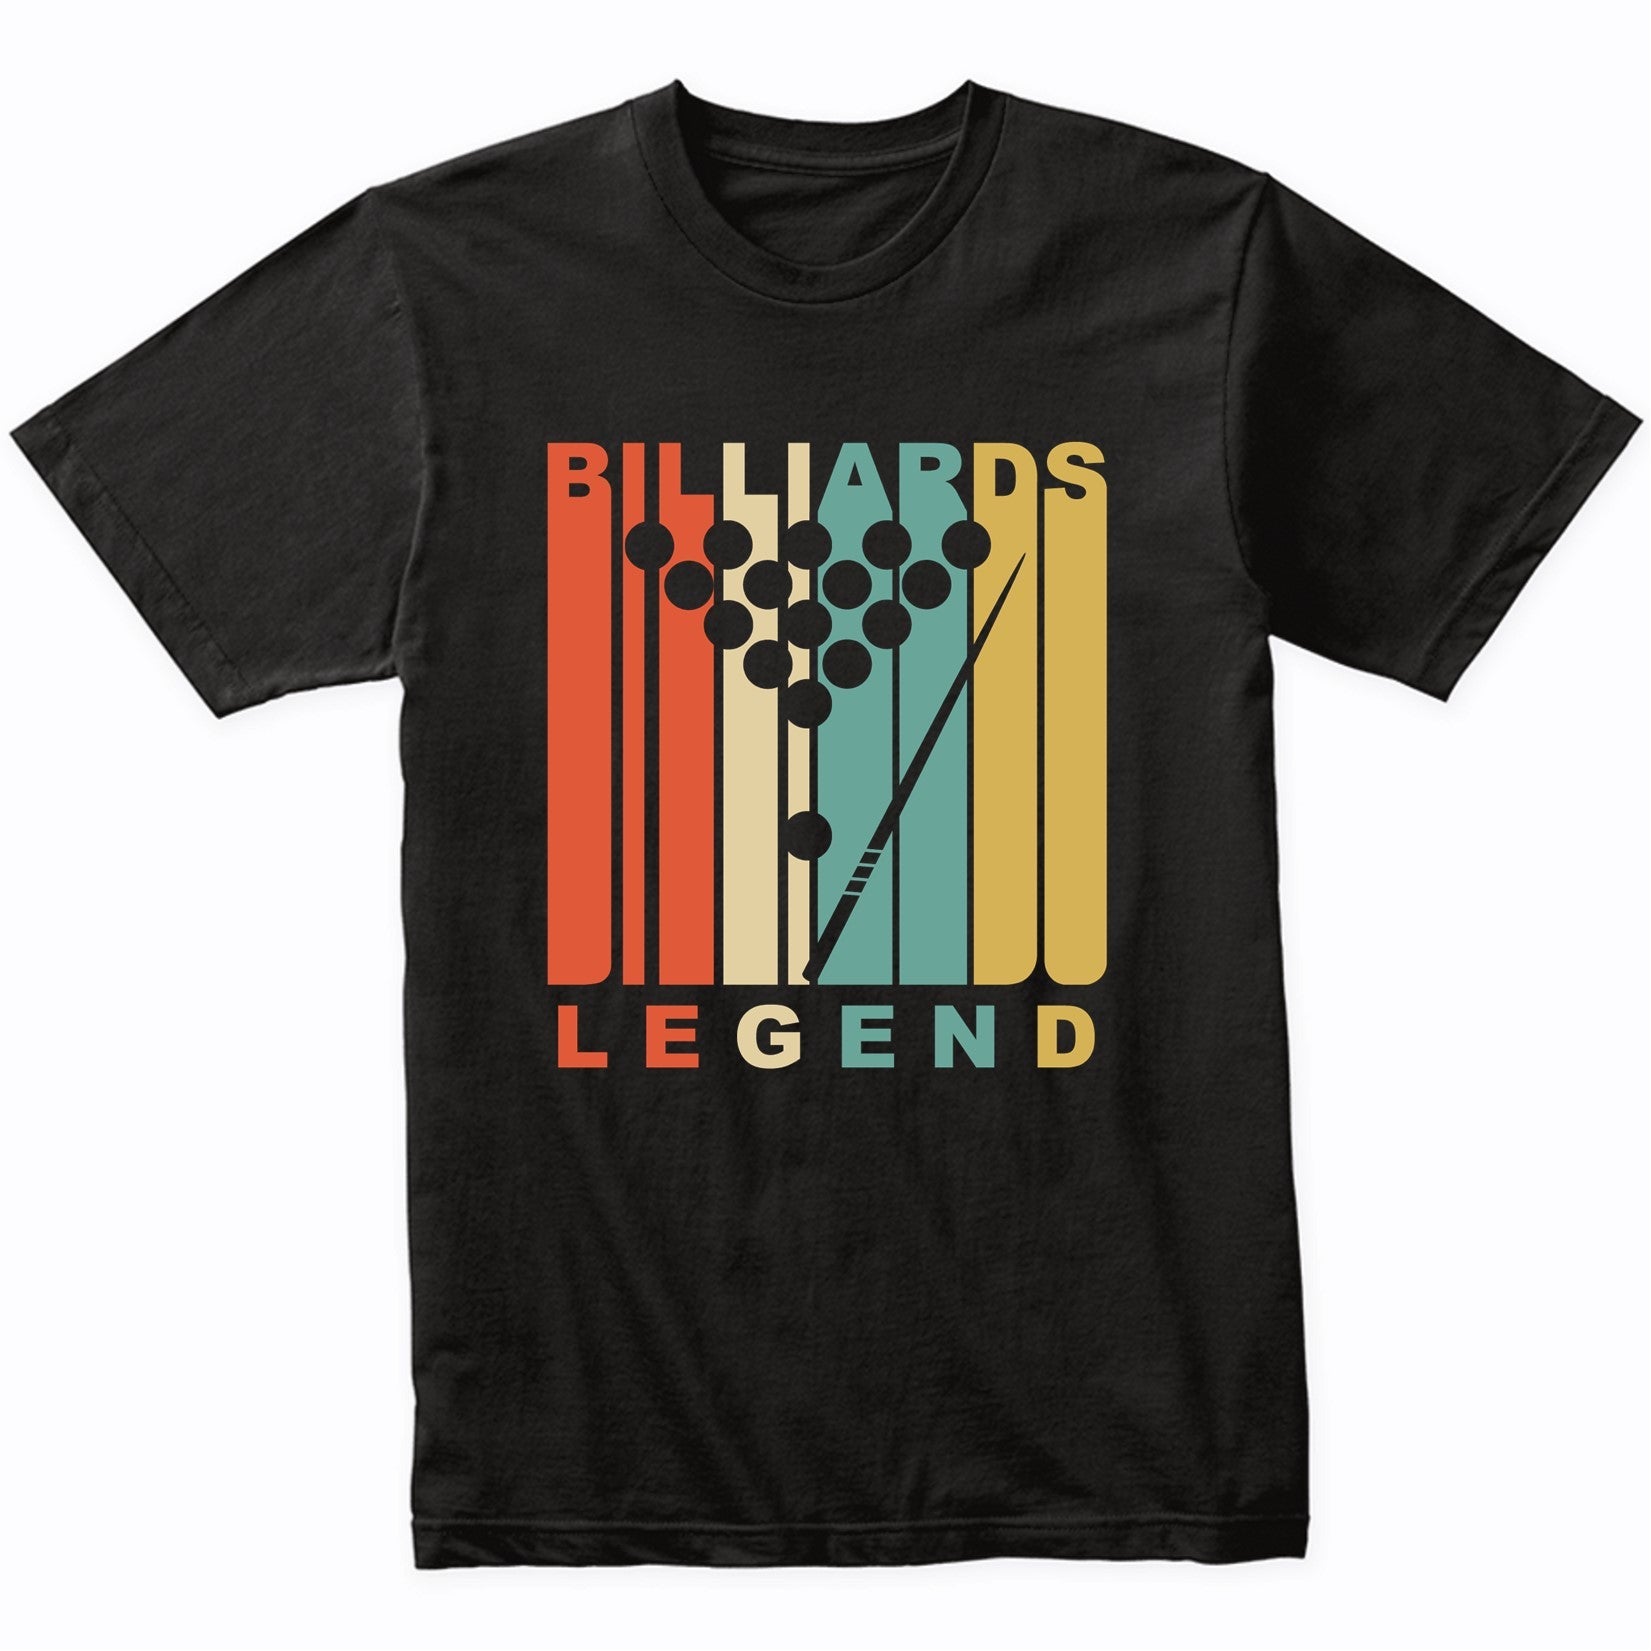 Vintage 1970's Style Billiards Legend Retro Pool T-Shirt